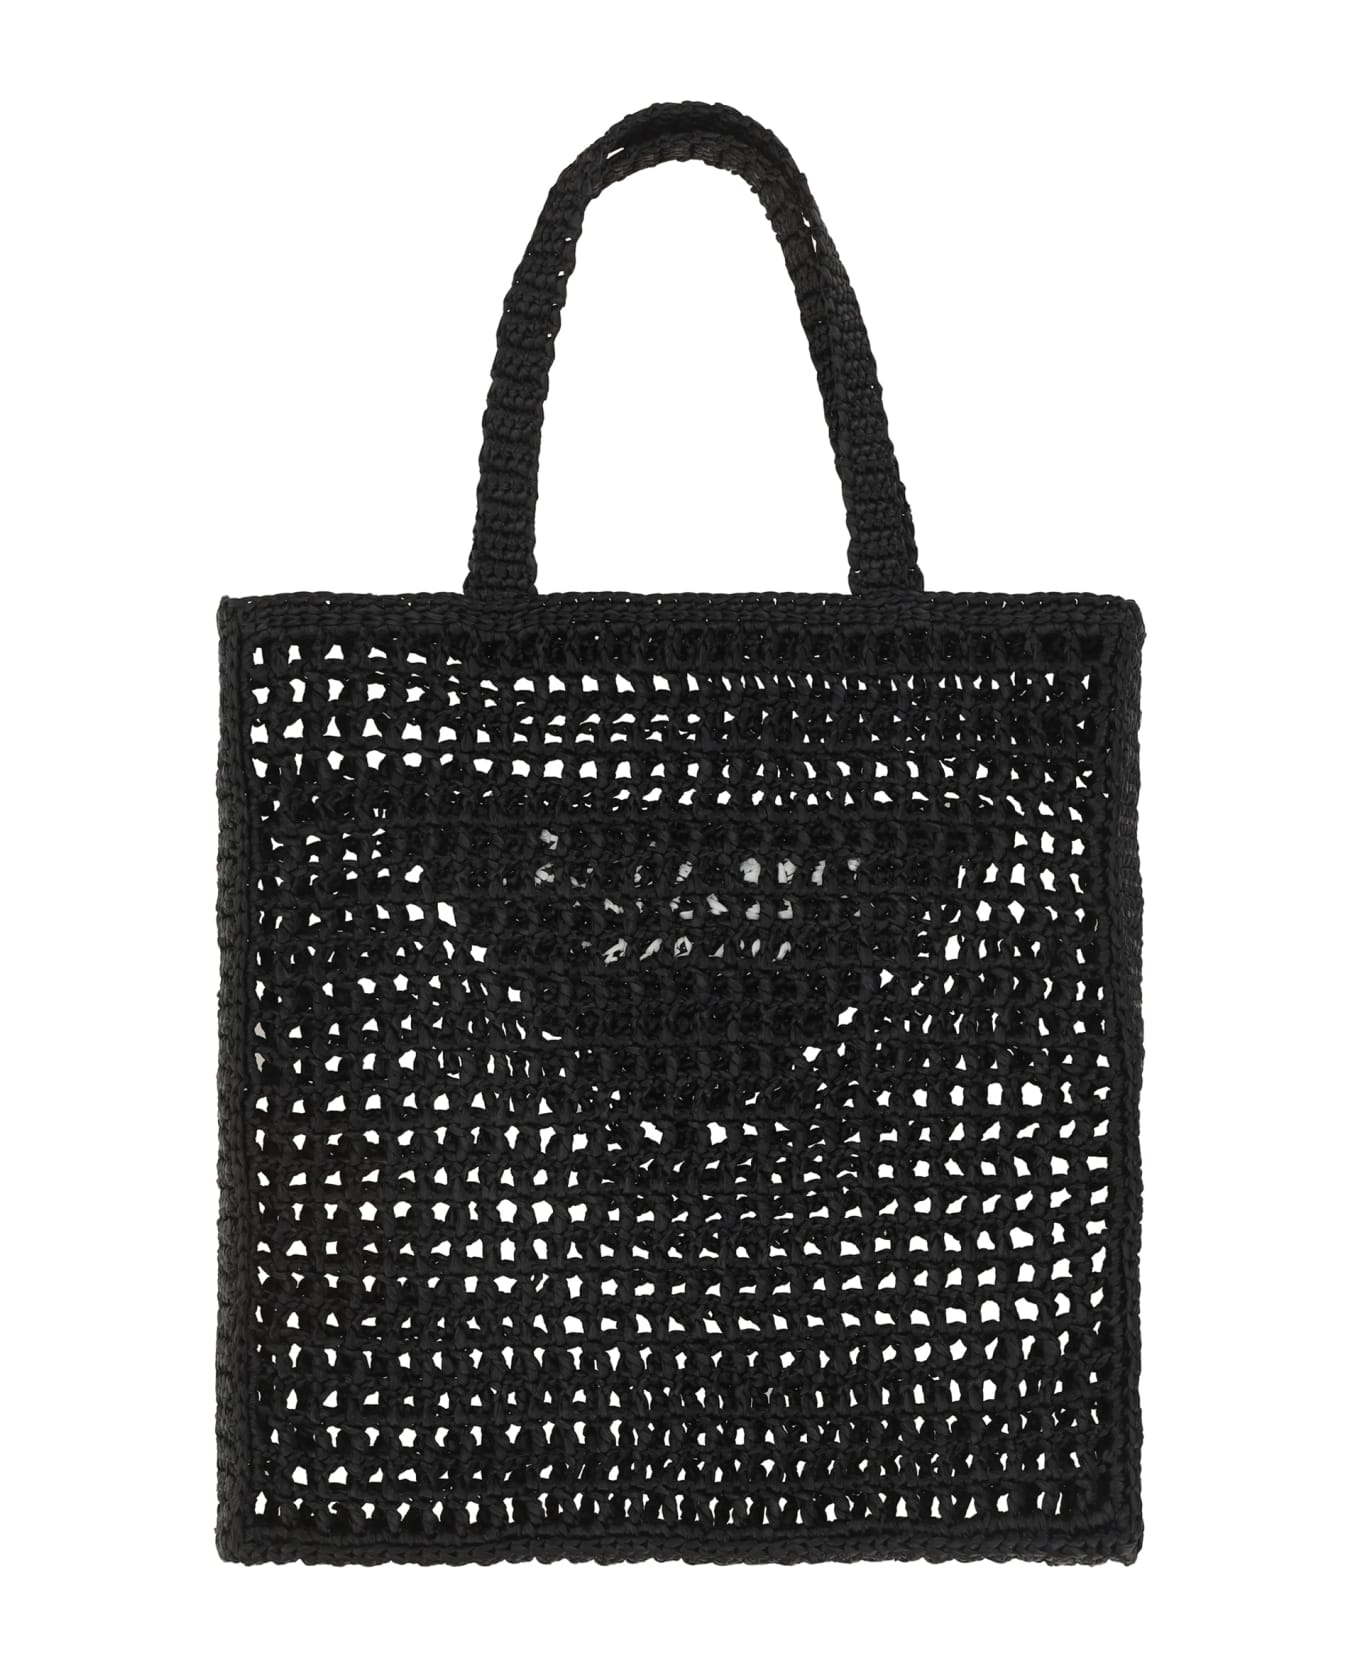 Prada Handbag - Black トートバッグ